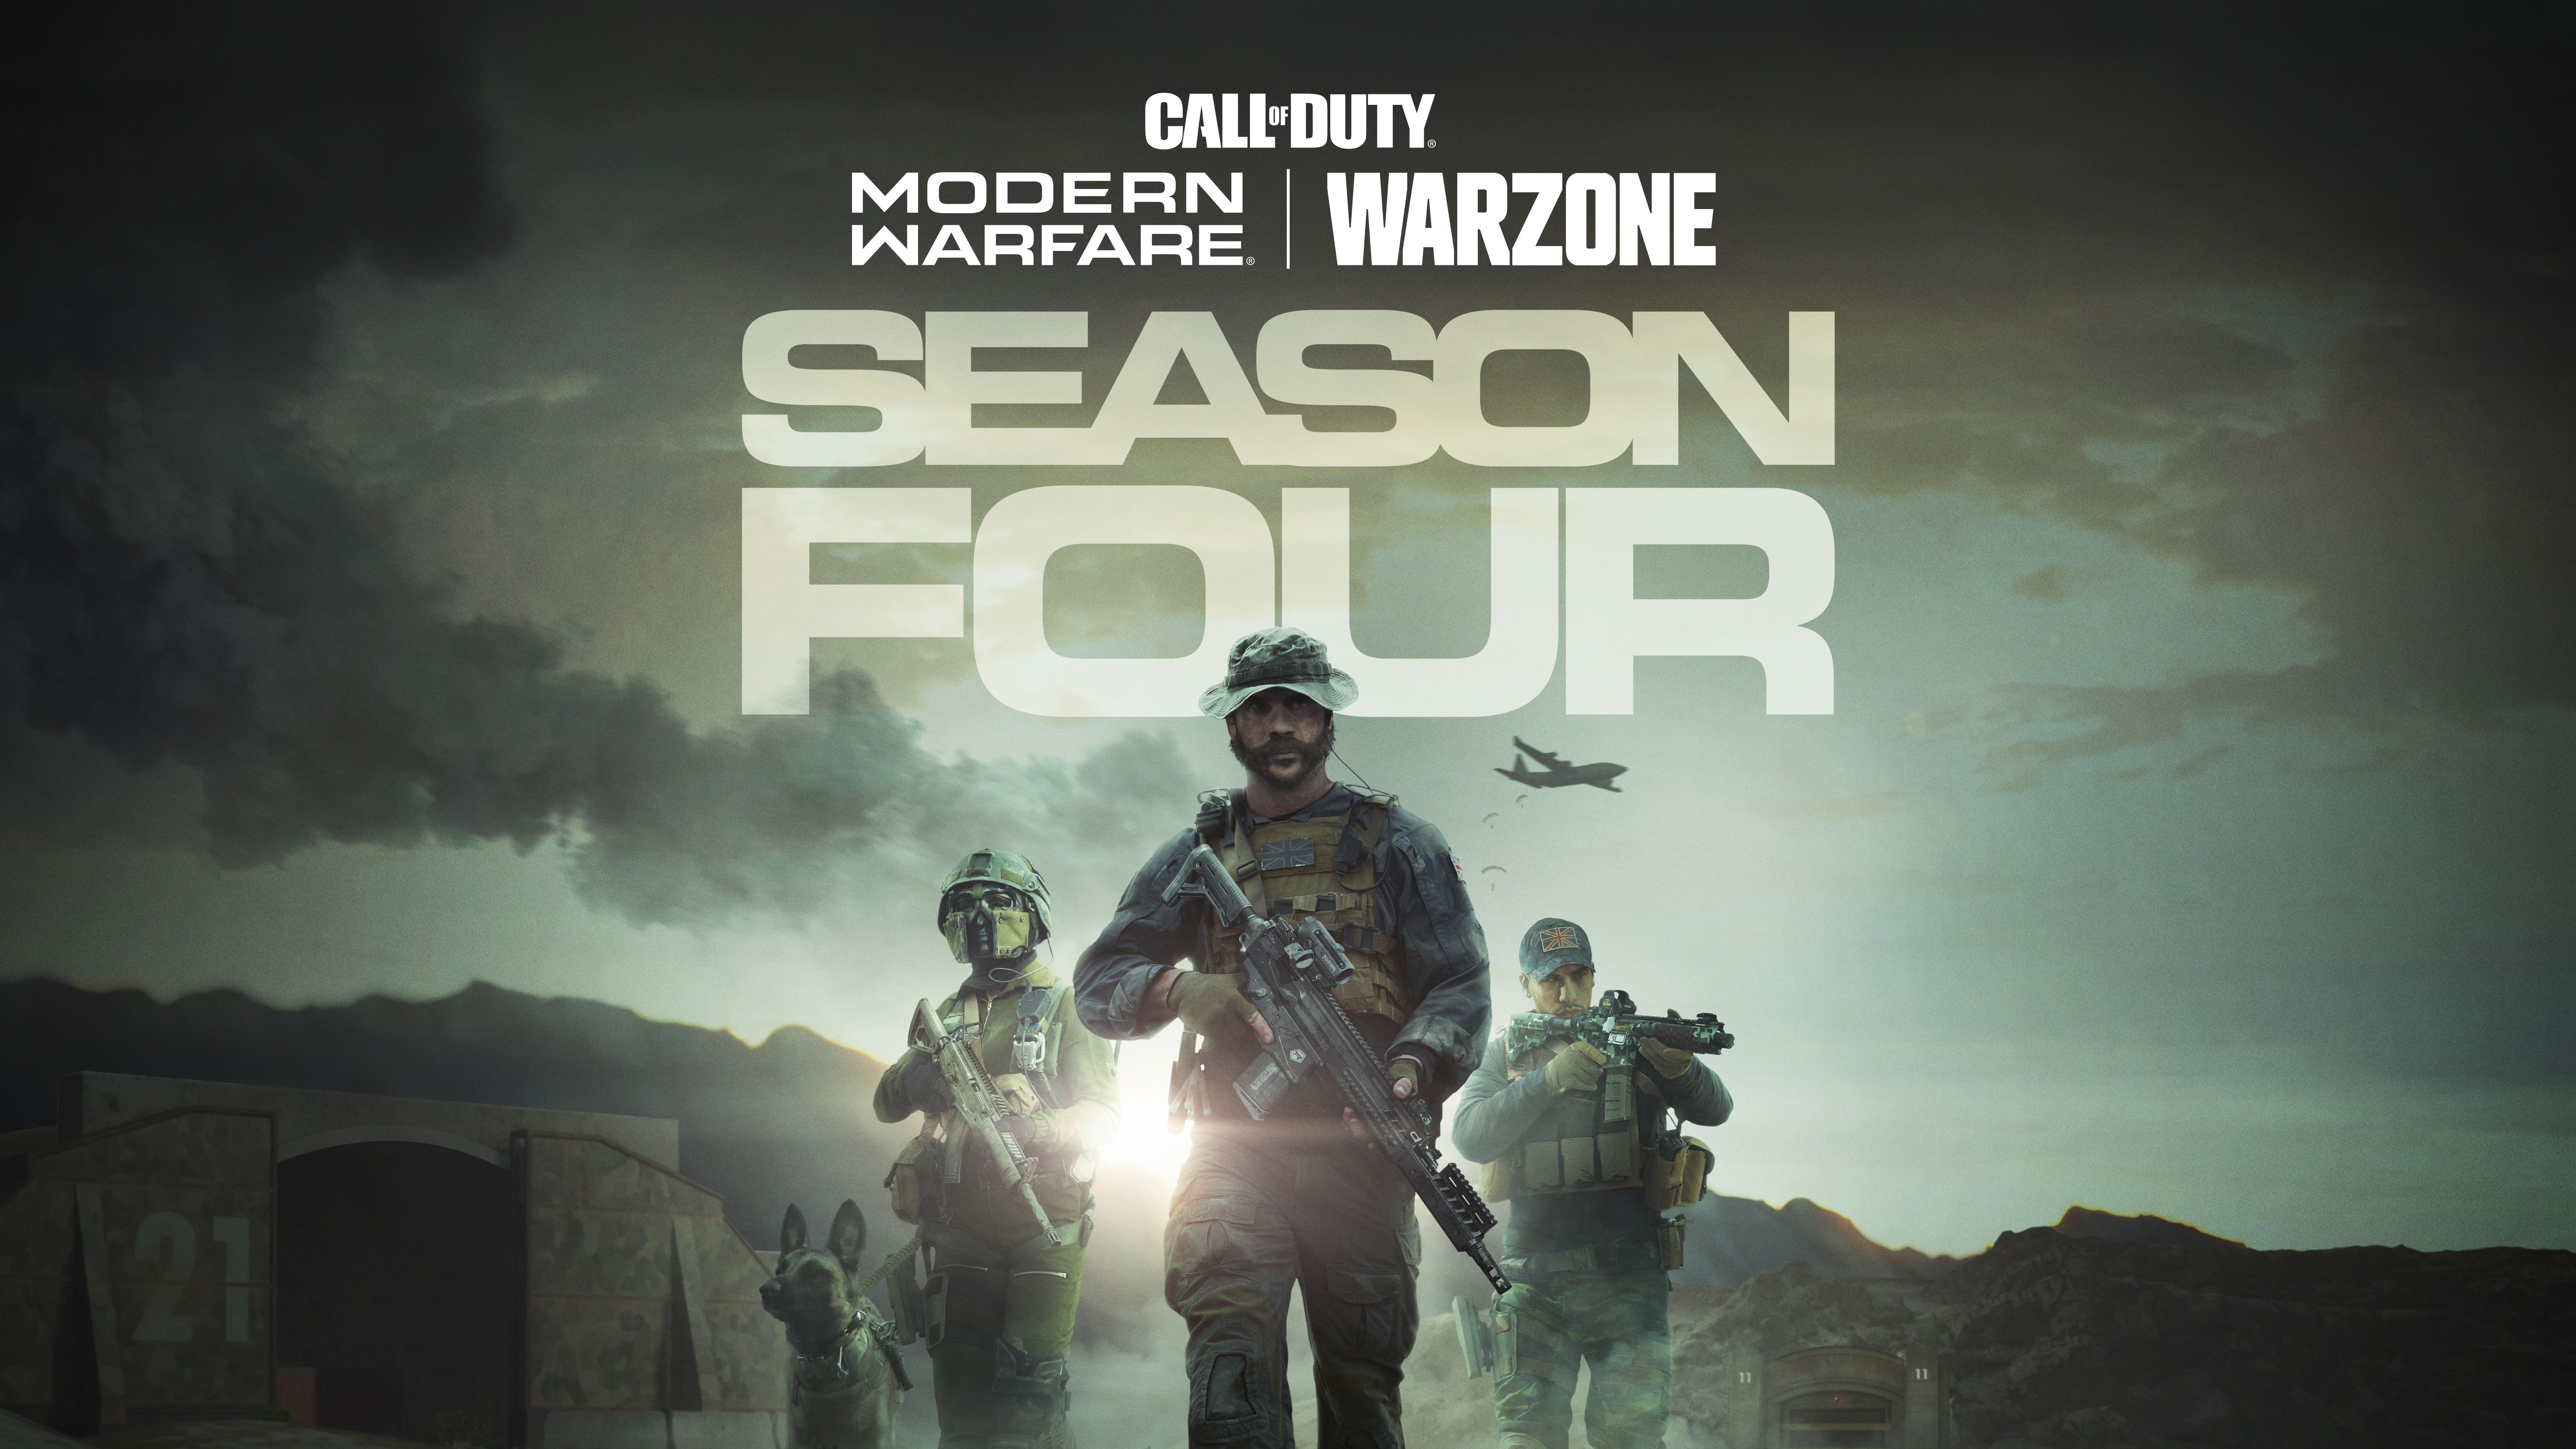 Call Of Duty Modern Warfare Season 4 Wallpaper, HD Games 4K Wallpaper, Image, Photo and Background